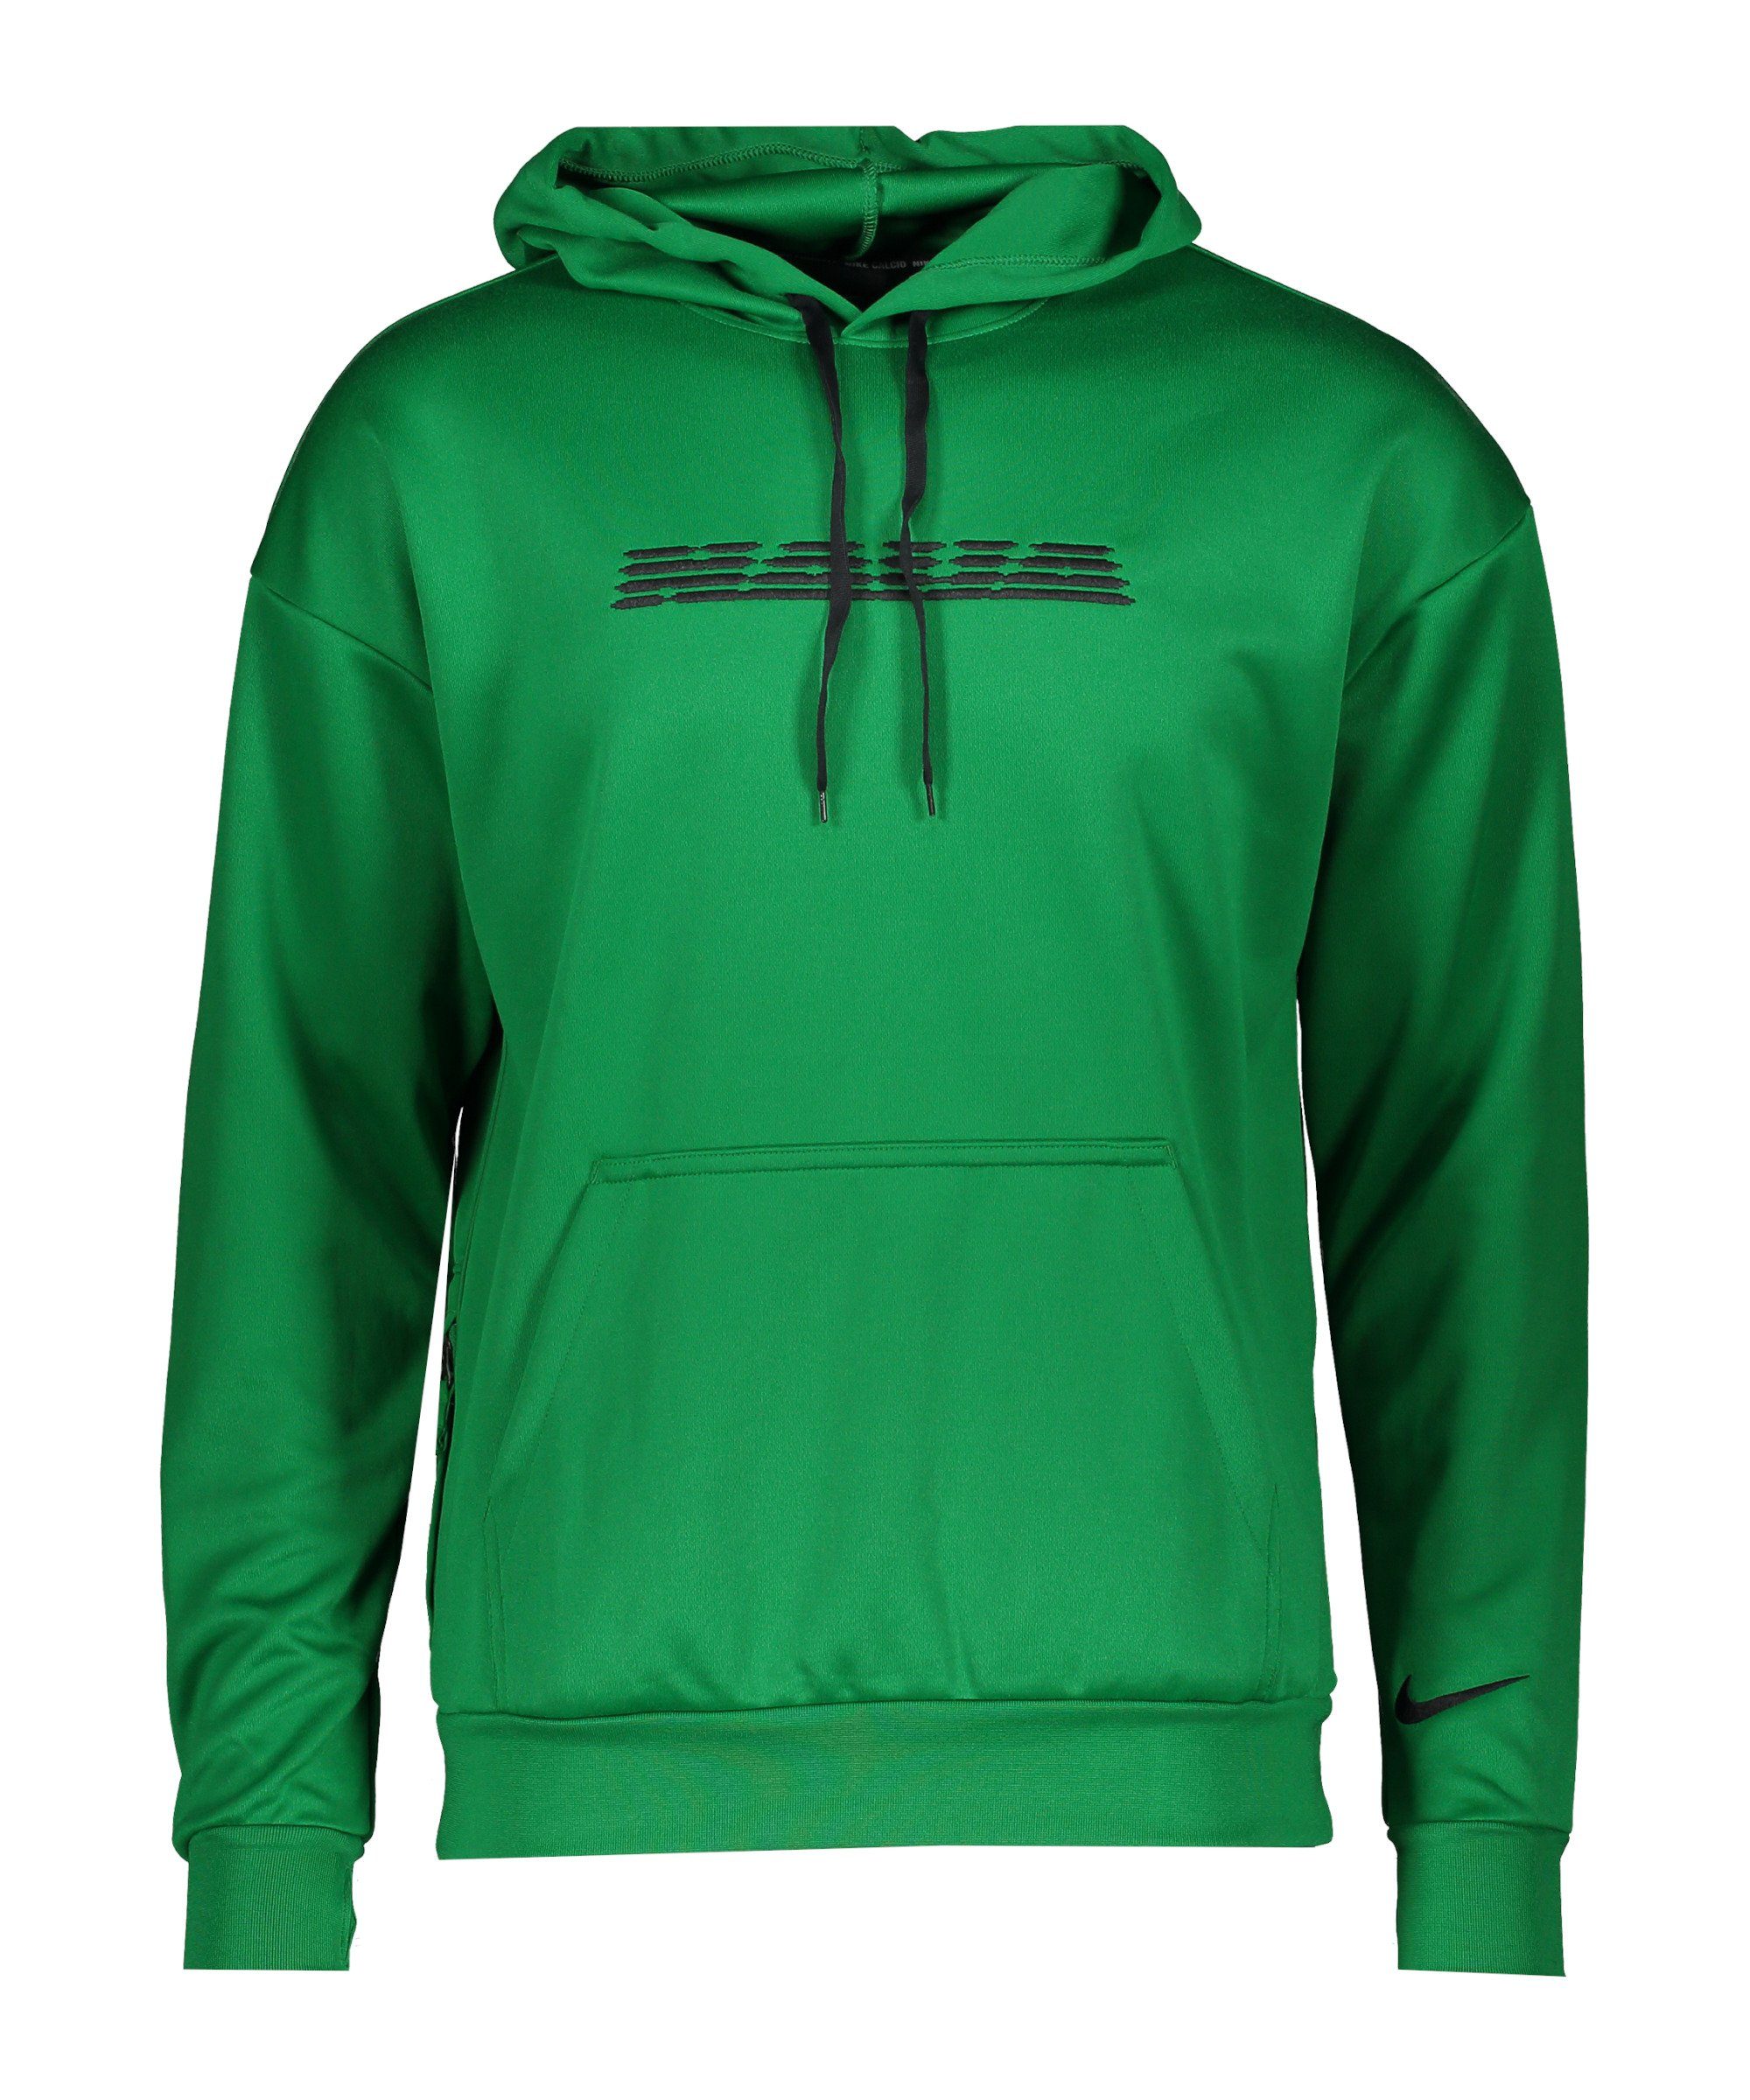 Nike Hoody "Naija" Sportswear Nigeria Sweatshirt